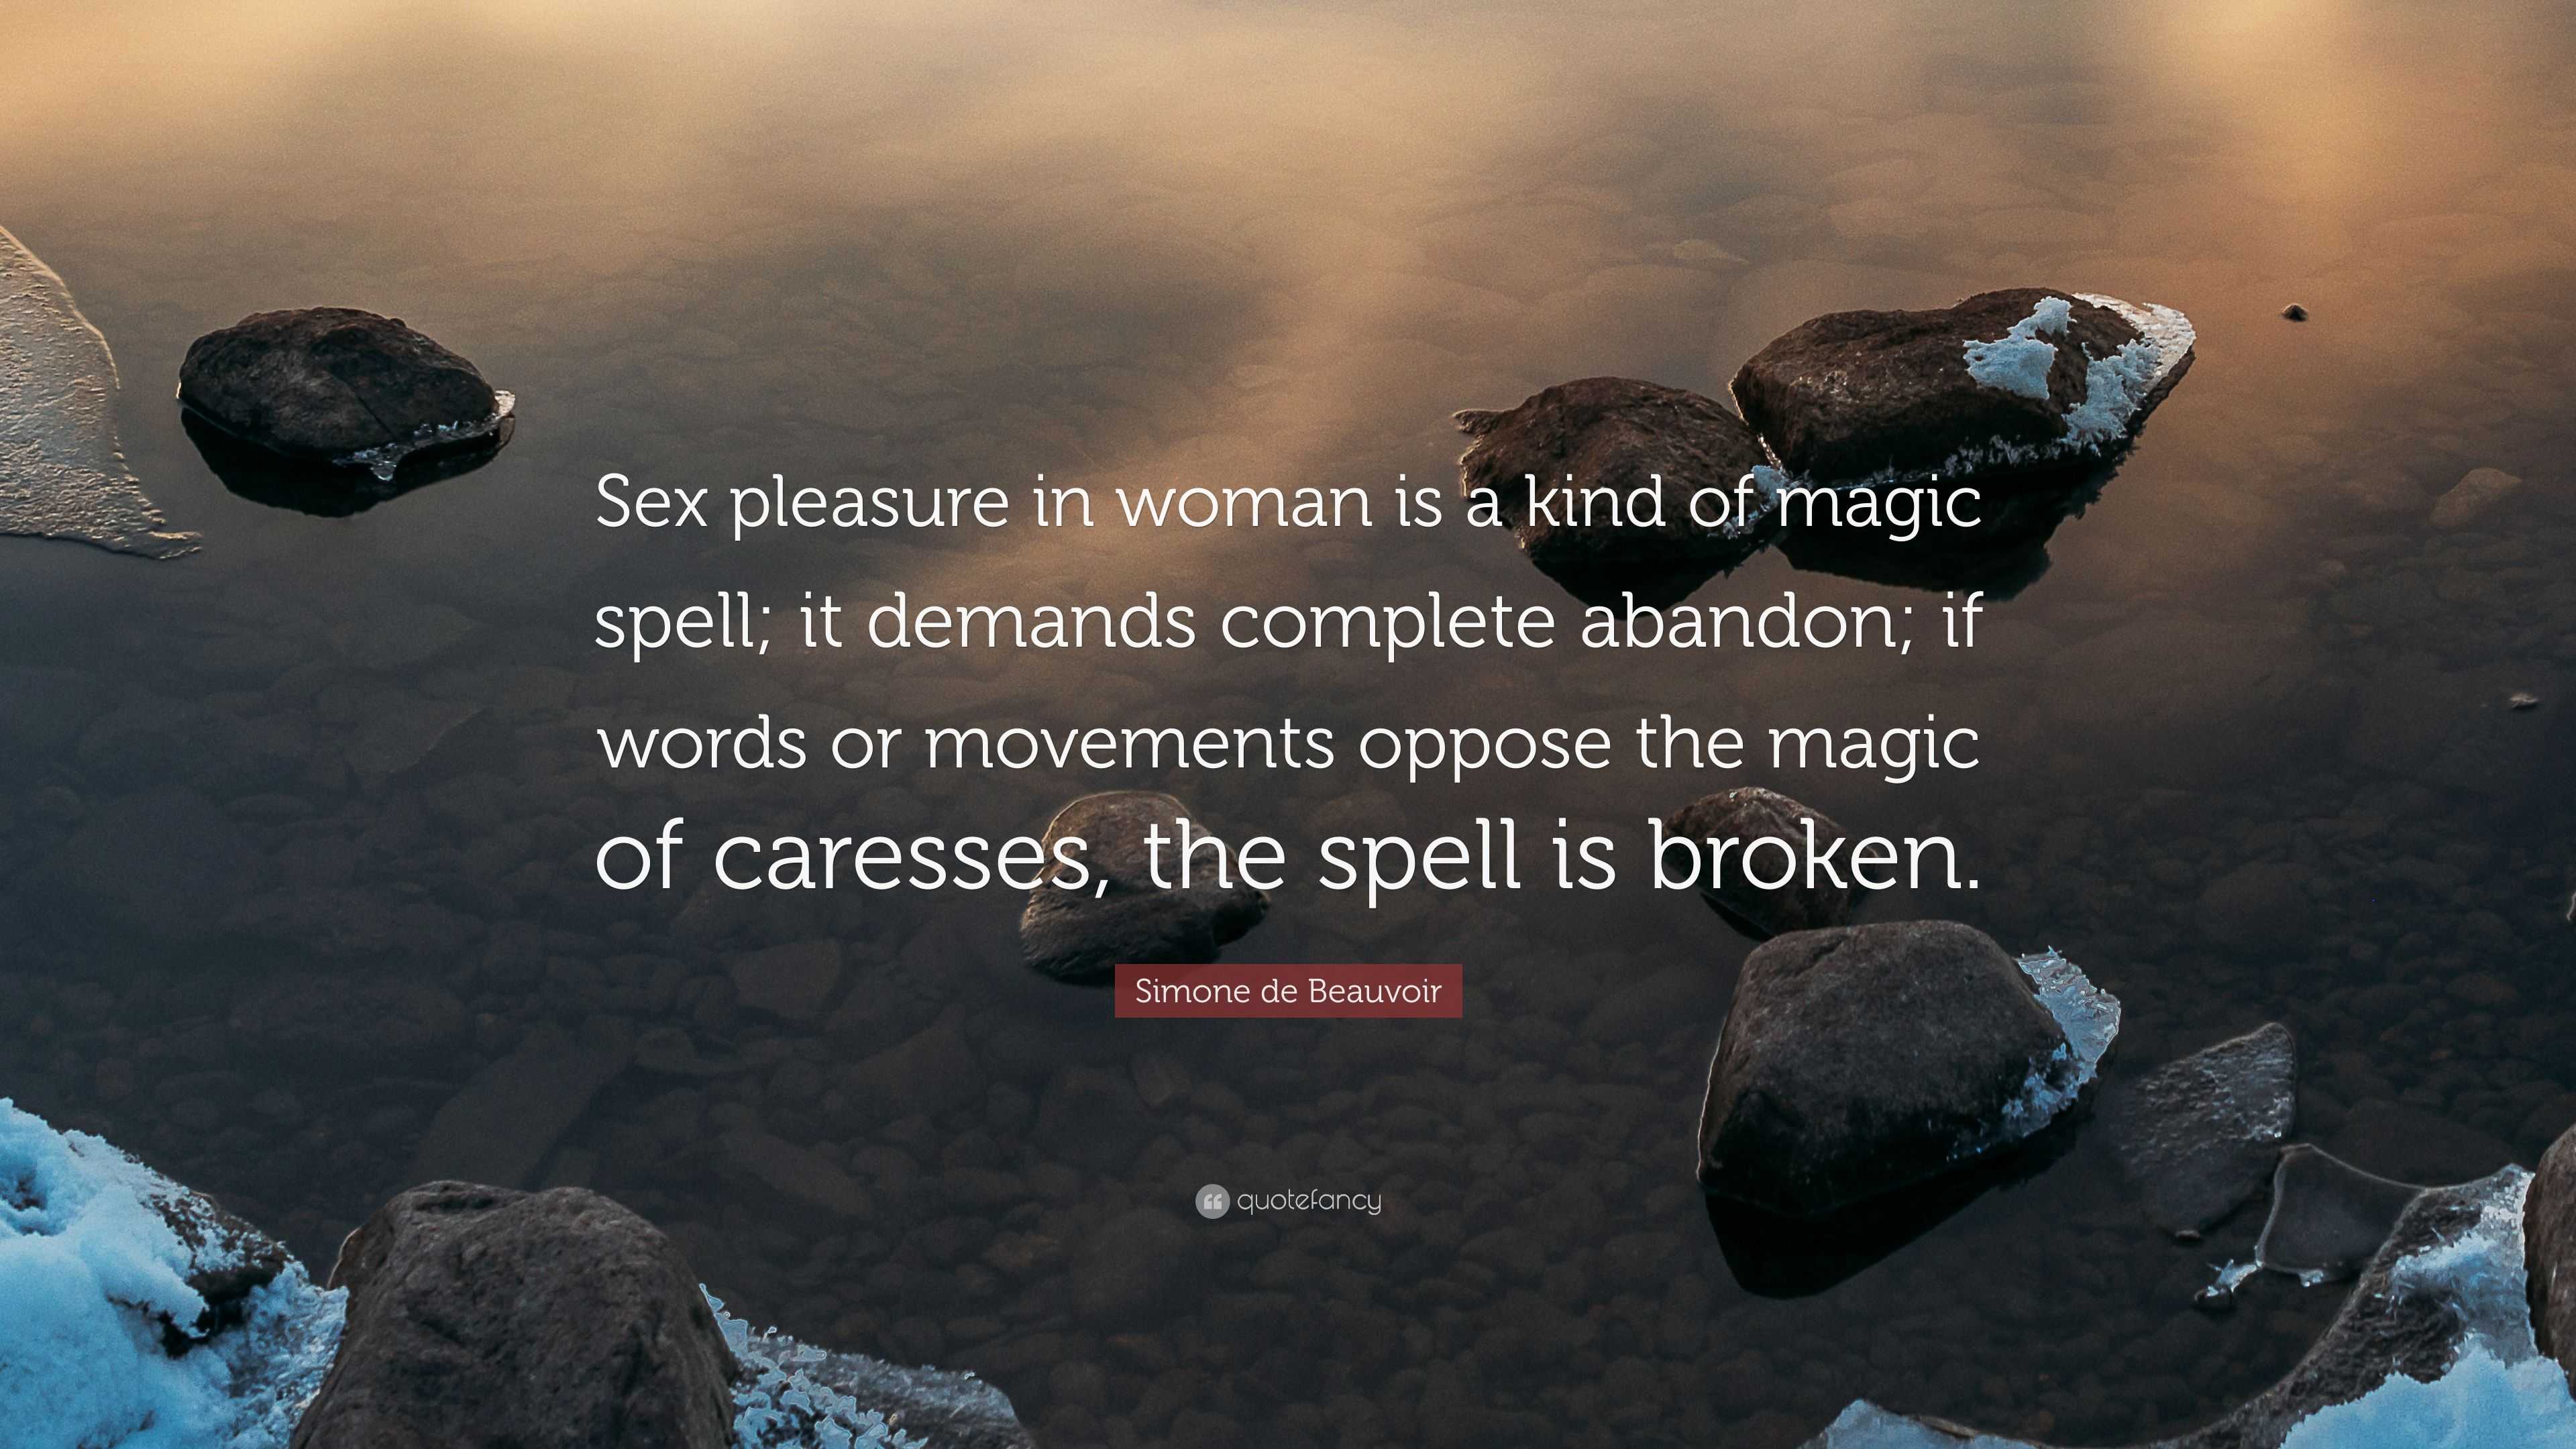 Simone de Beauvoir quote: Sex pleasure in woman is a kind of magic